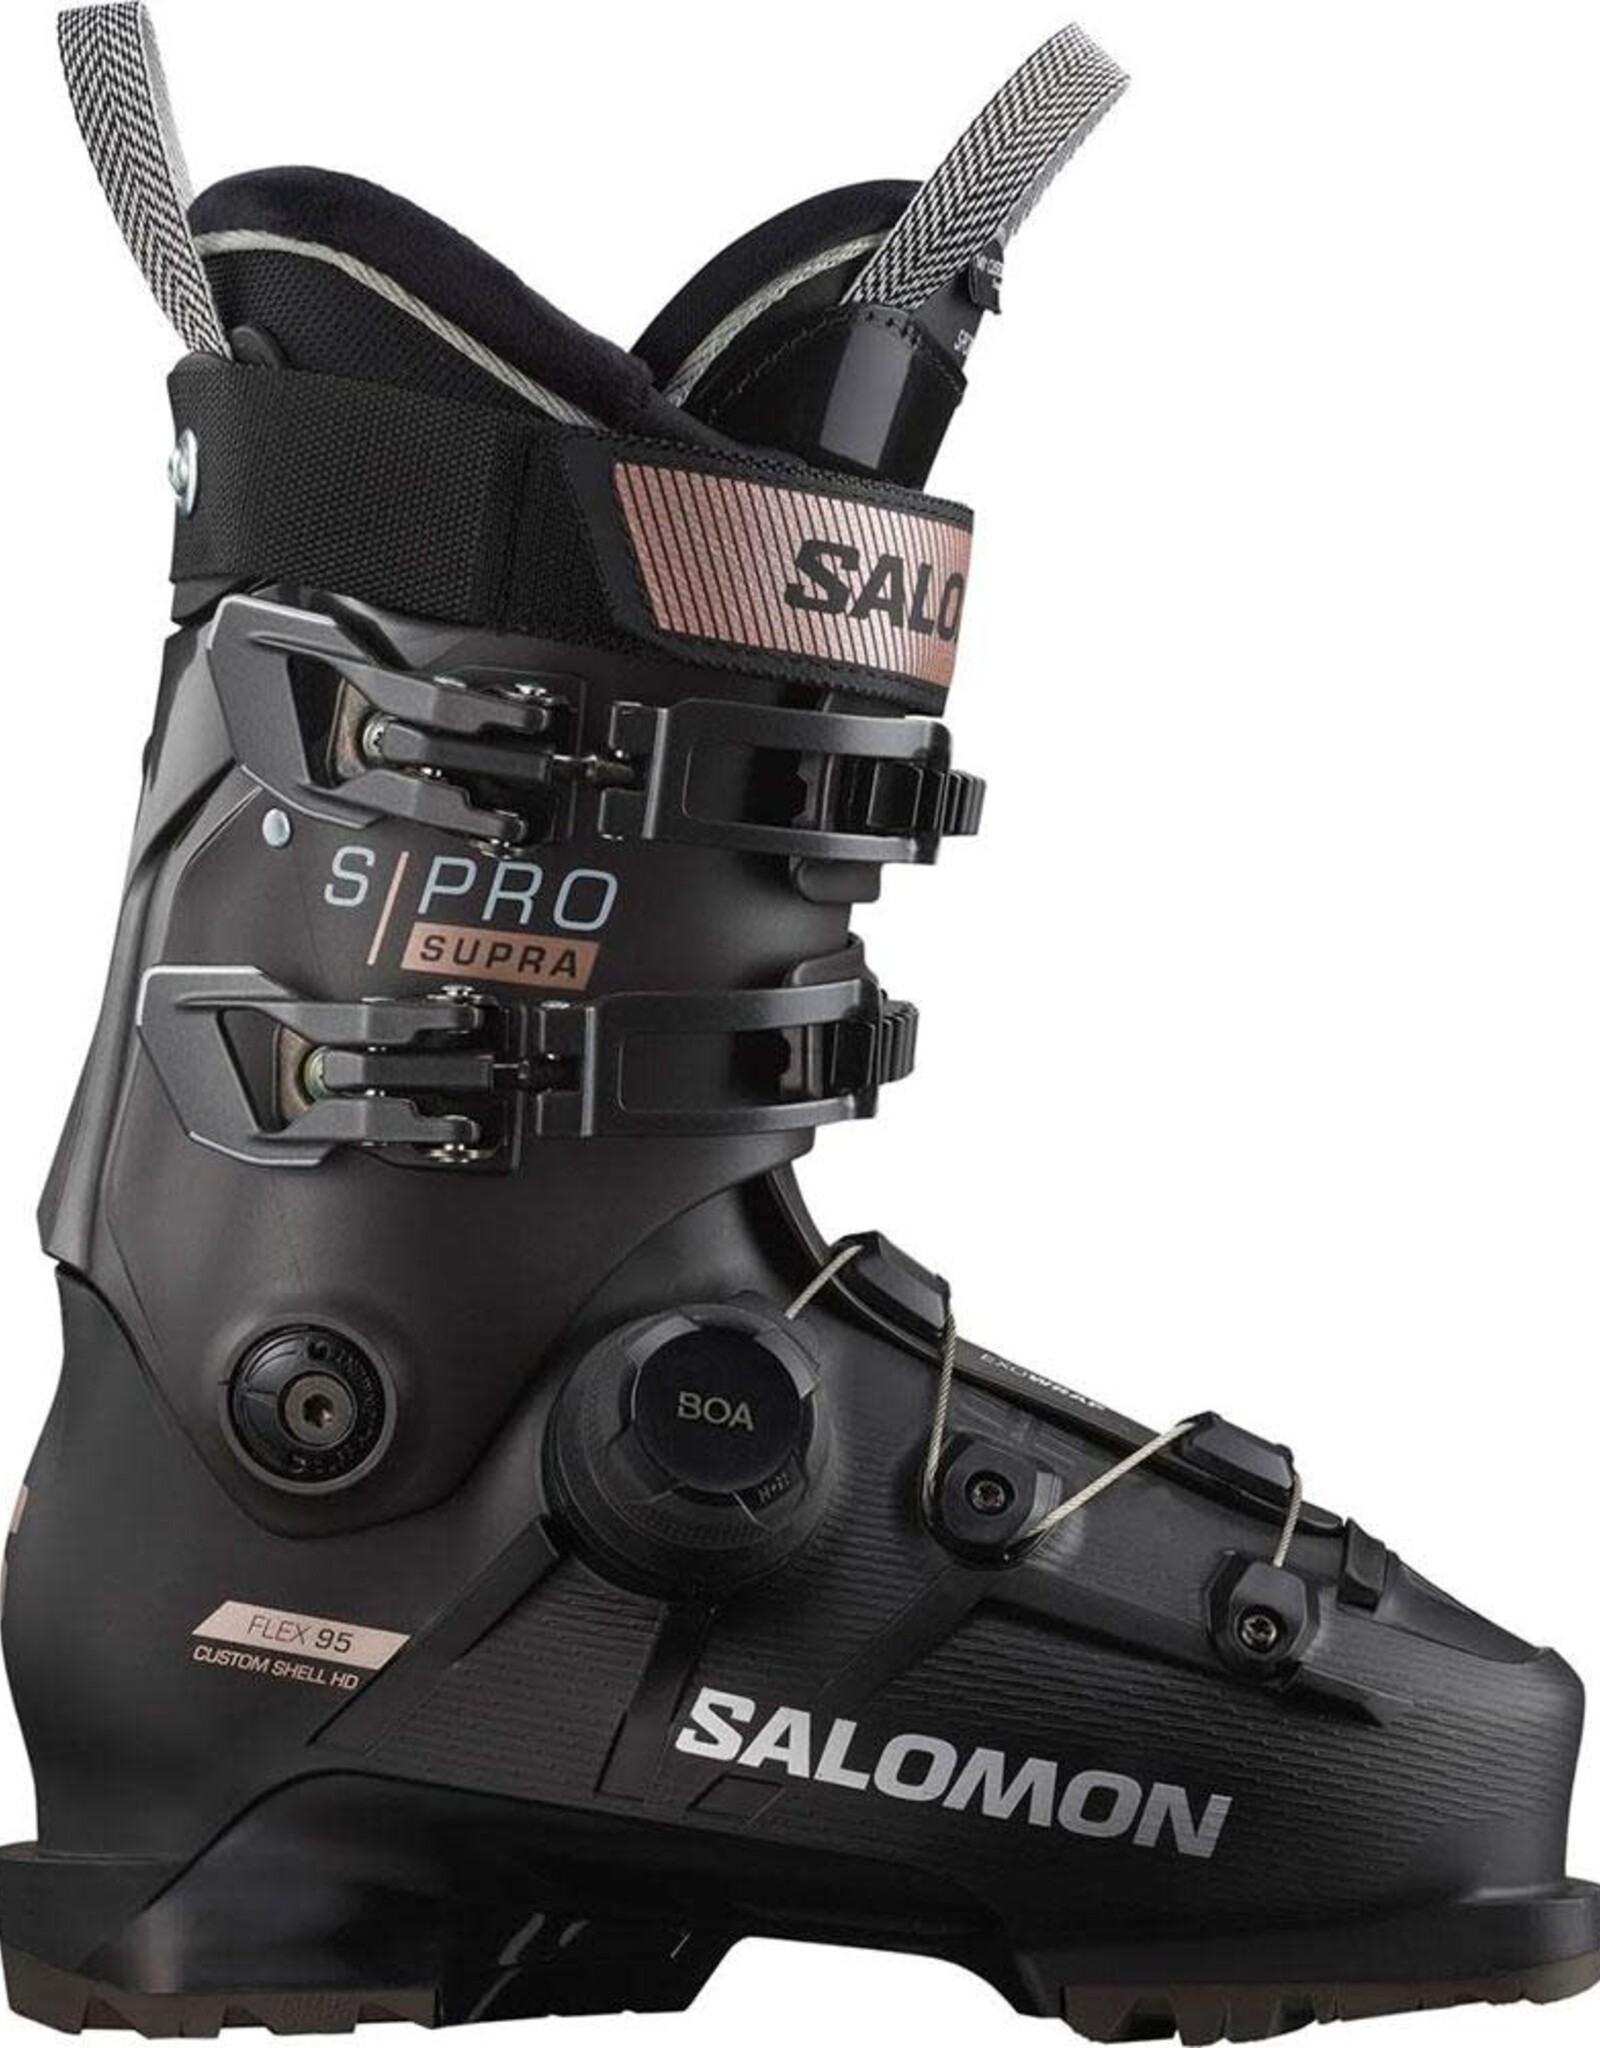 Salomon SALOMON S/PRO SUPRA BOA 95 W GW (23/24)